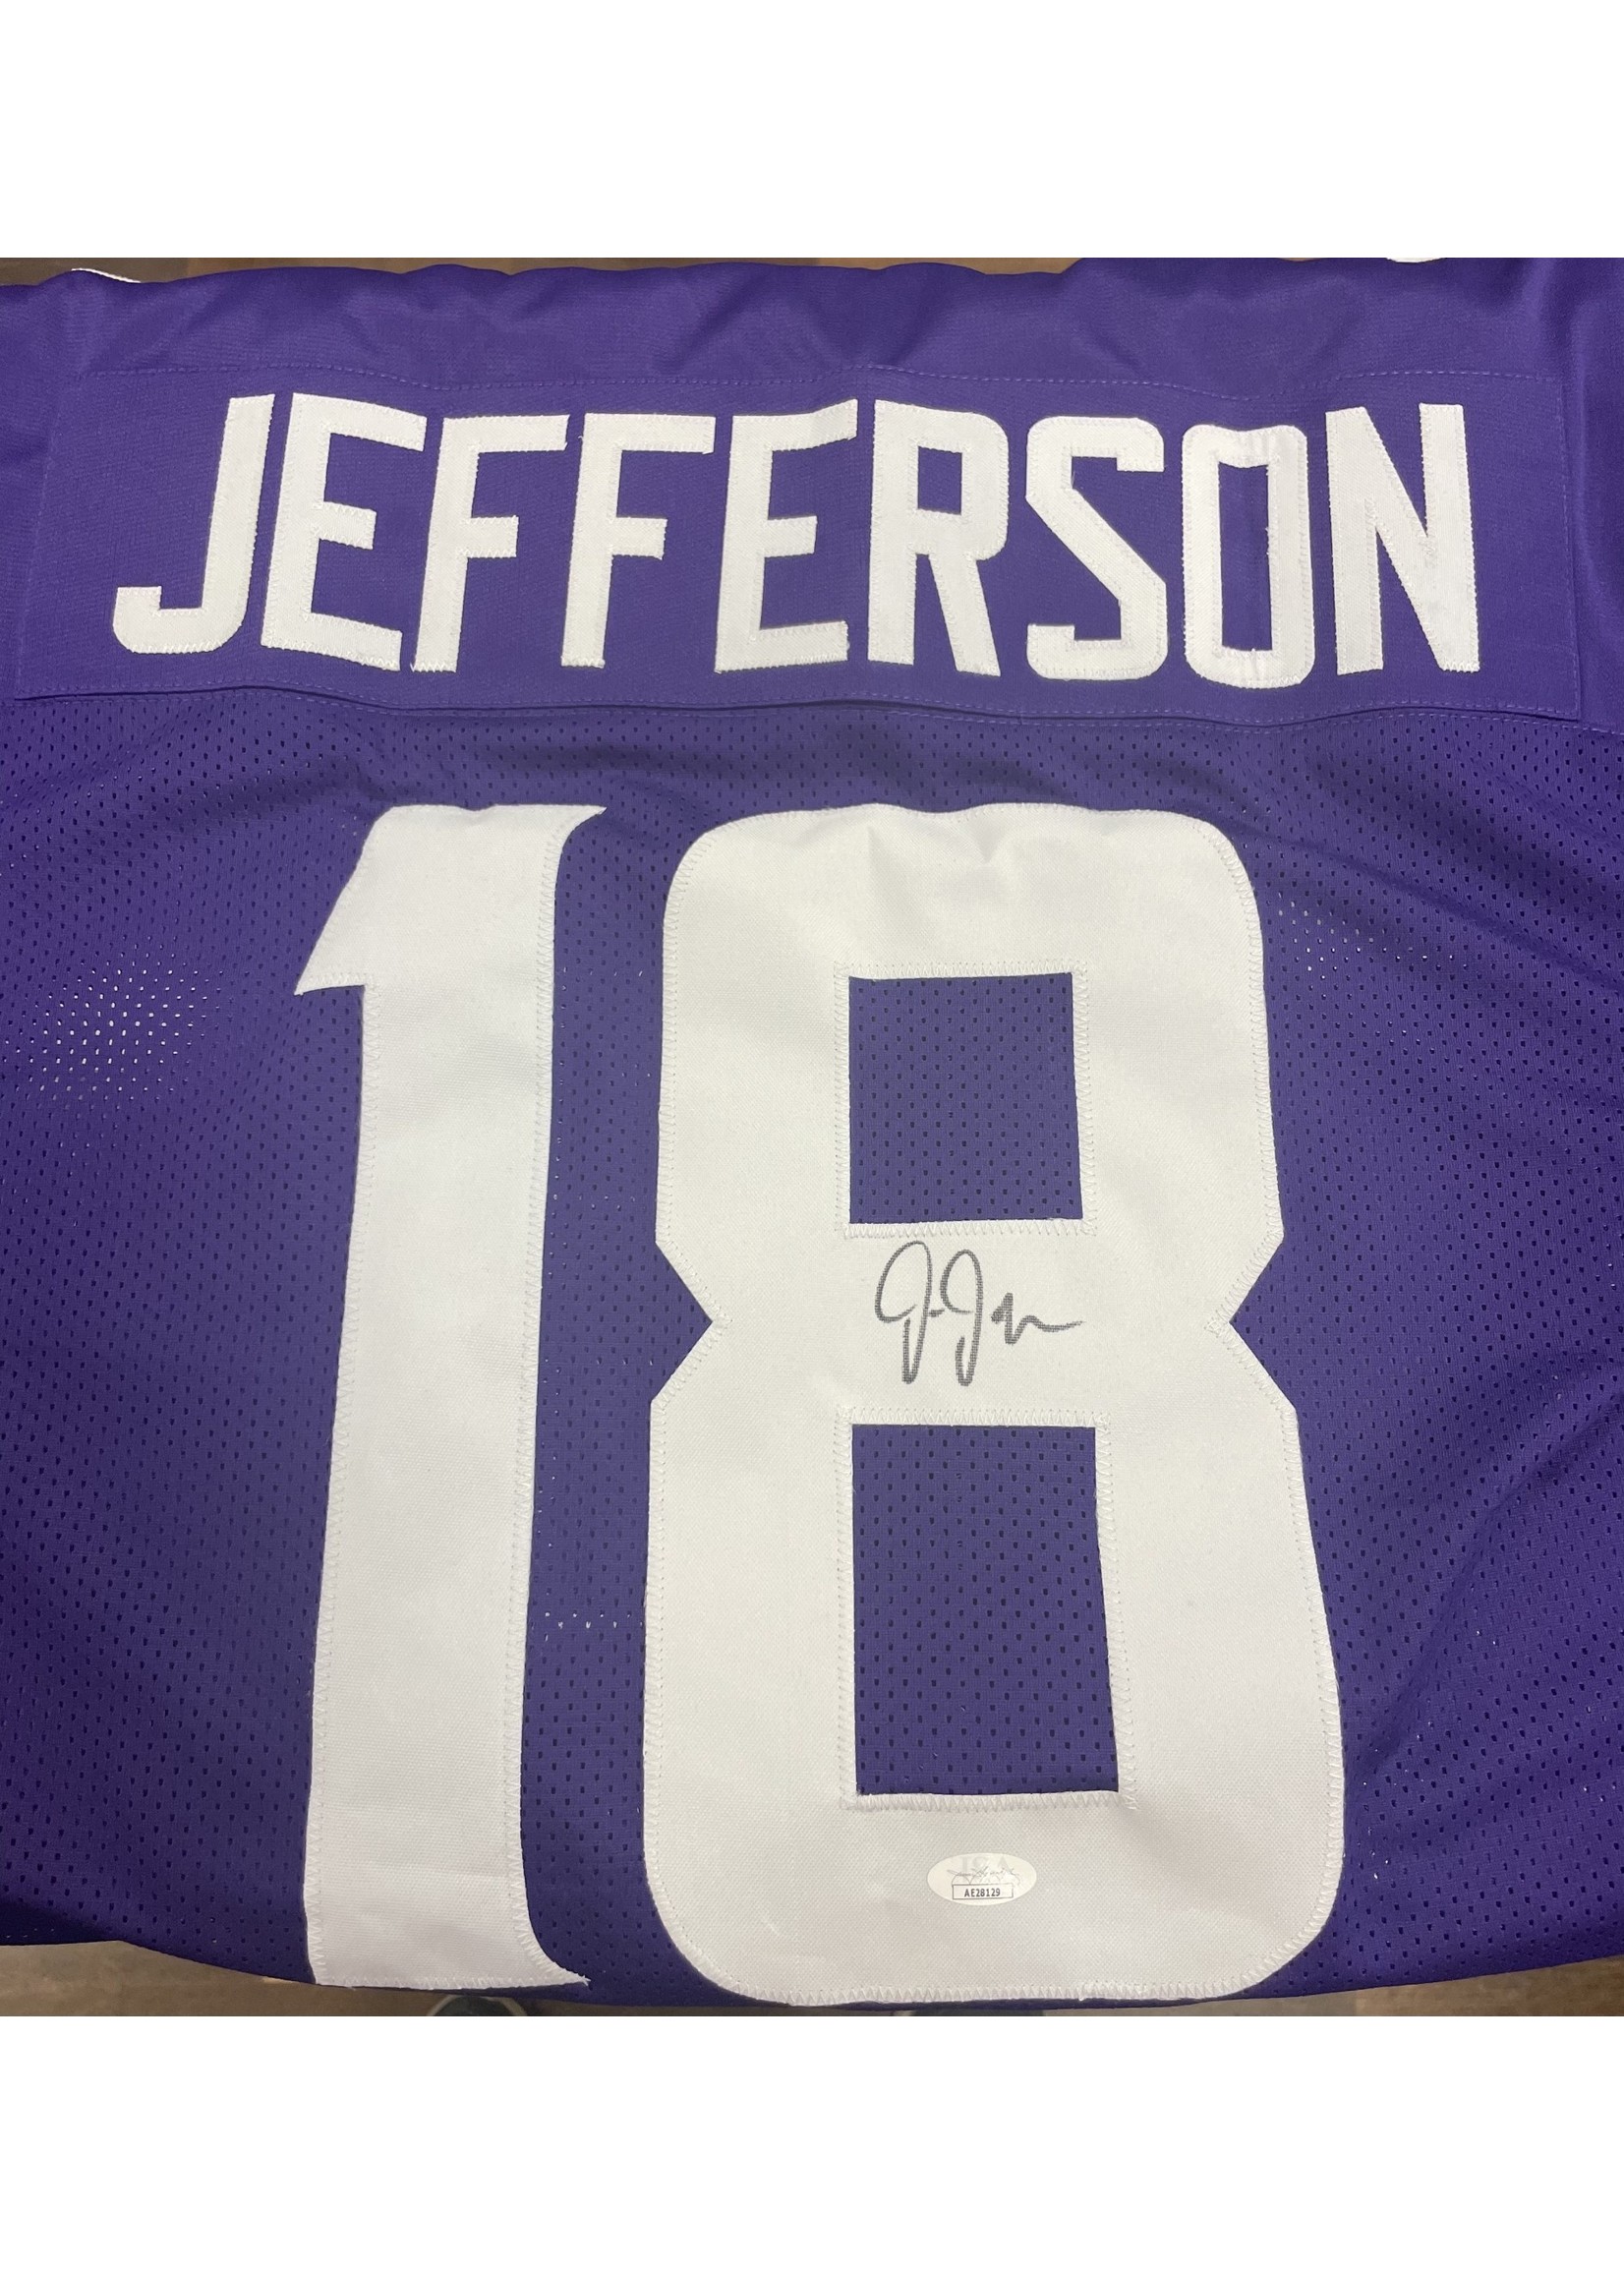 Justin Jefferson Jersey C